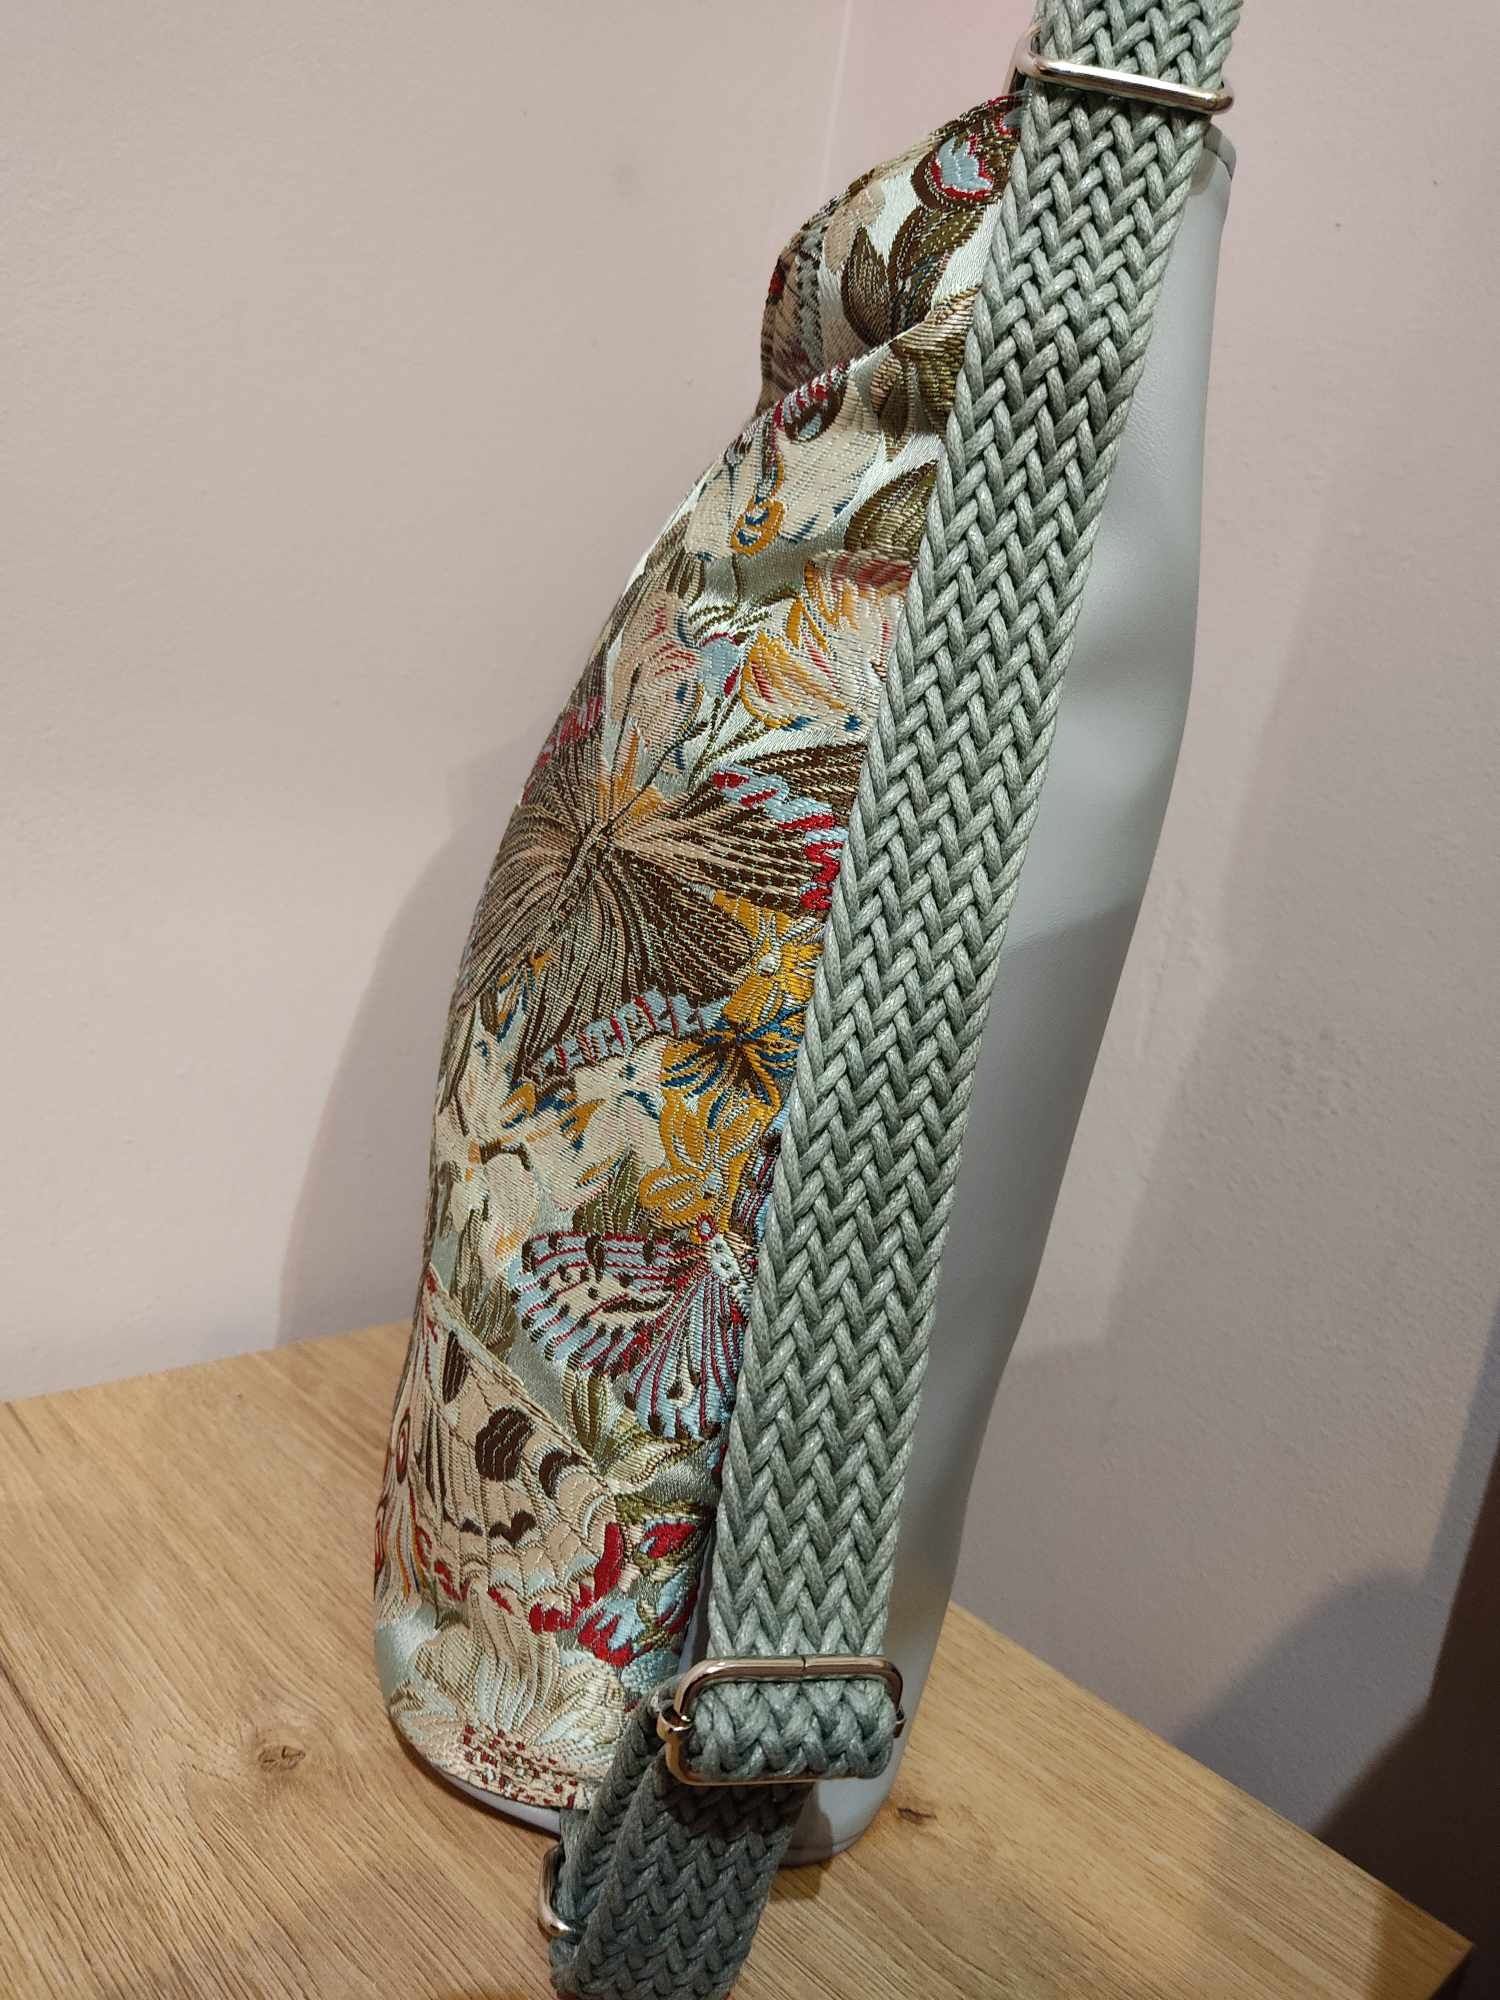 Torebko-plecak ekoskóra popielata motyle handmade